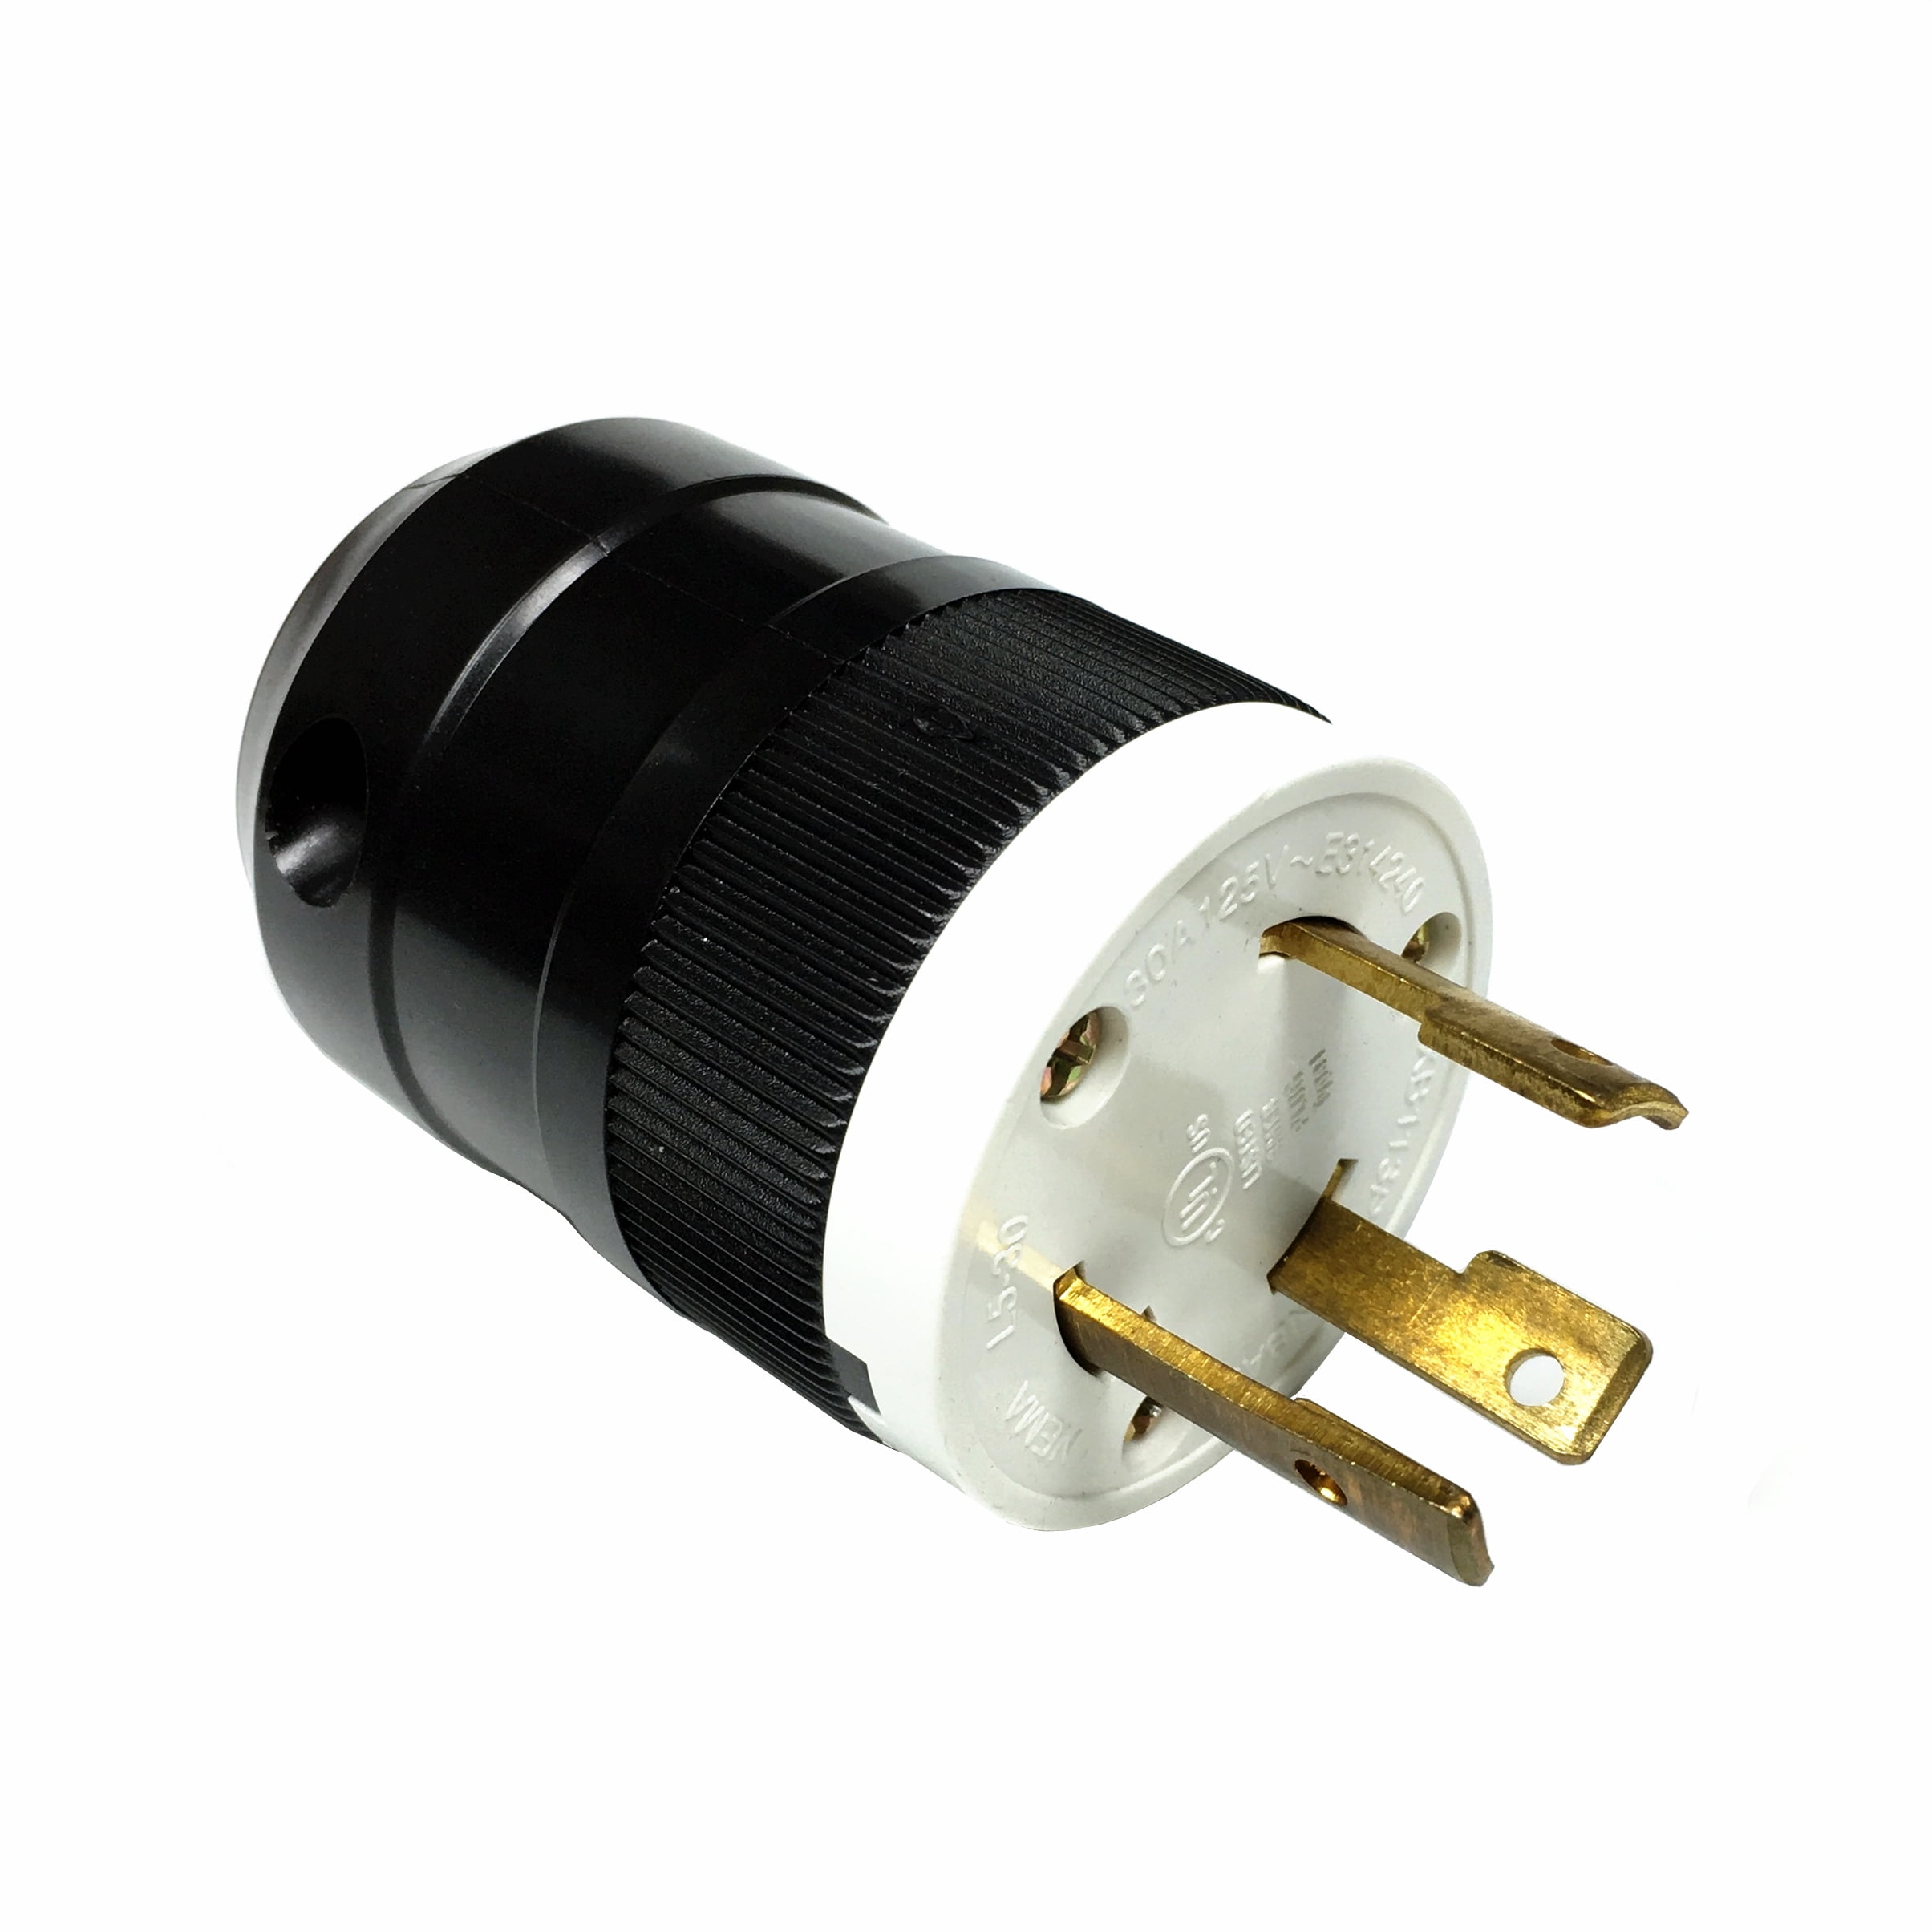 NEMA L5-30P L5-30R 30A 125V Twist Lock Electrical Plug Connector